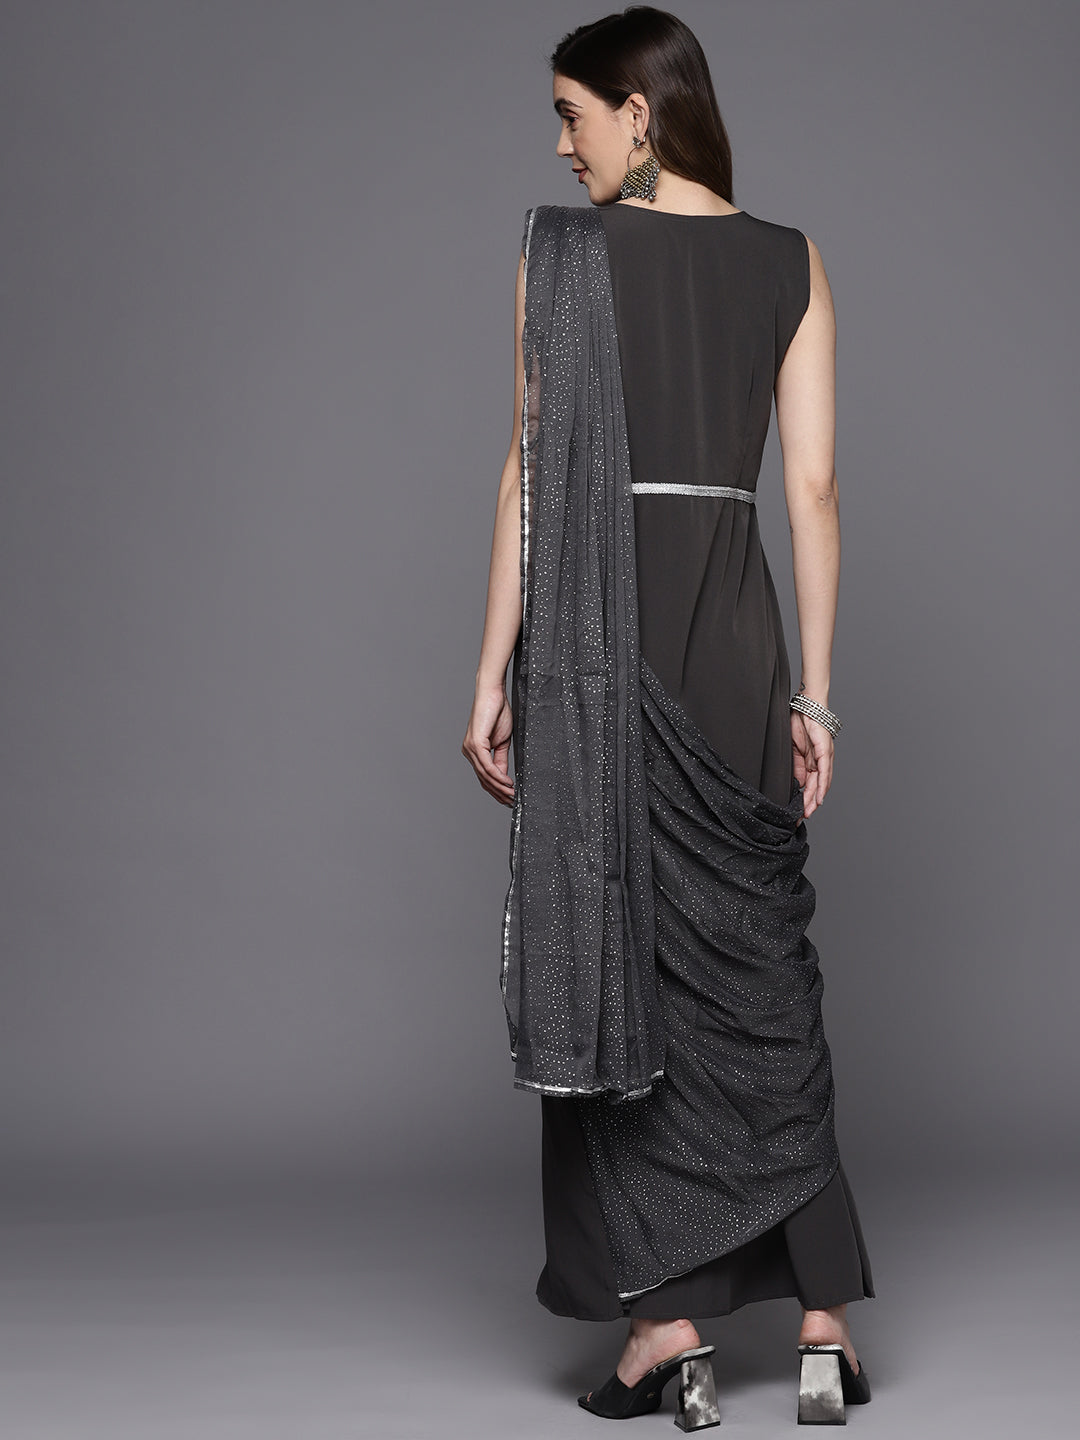 Grey Abstract Print Layered Ethnic Dress